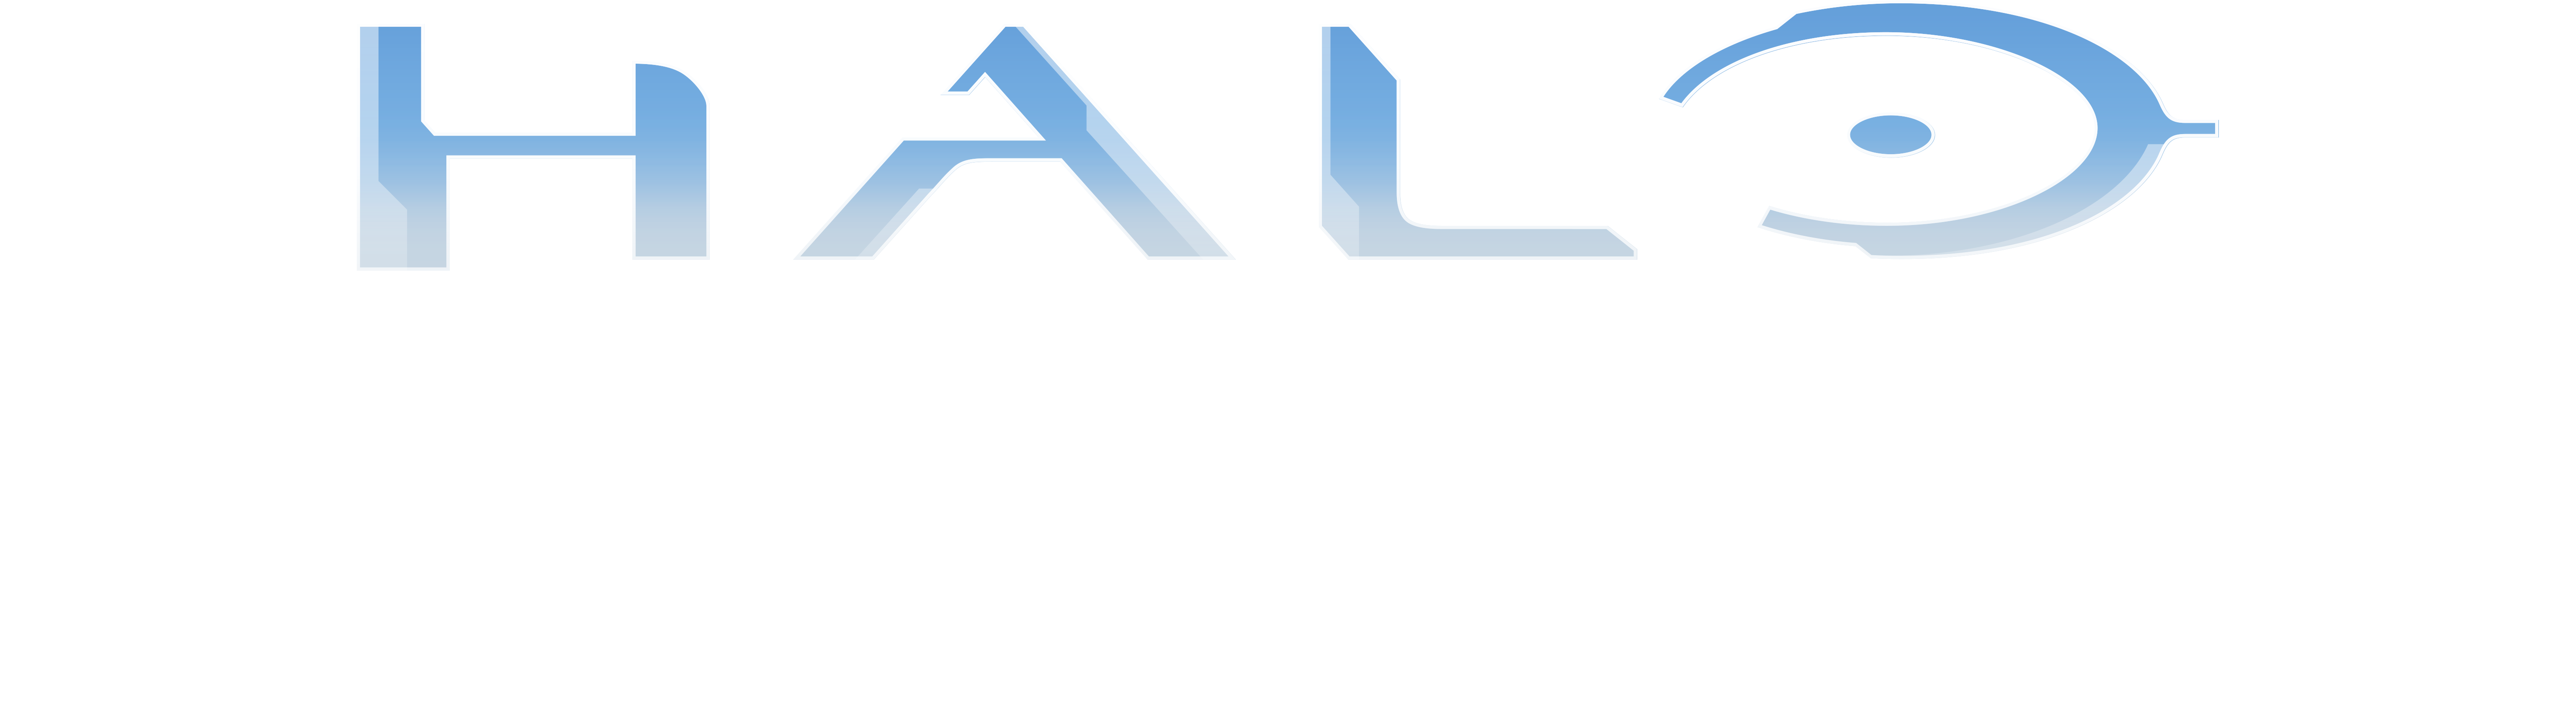 halo infinite logo